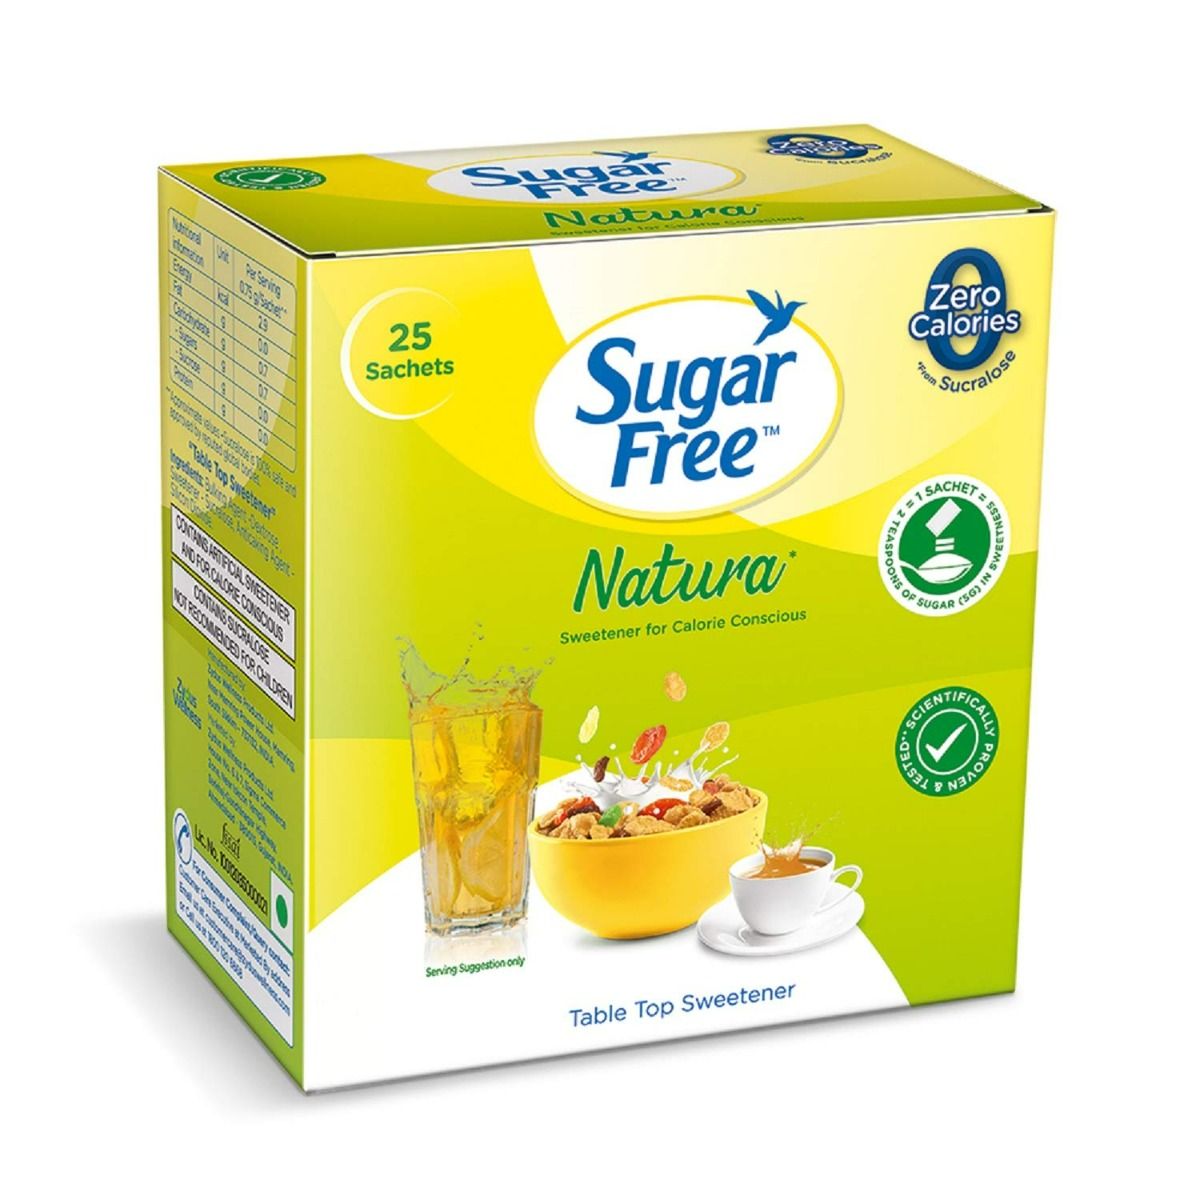 Sugar Free Natura Low Calorie Sugar Substitute, 25 Sachets, Pack of 1 